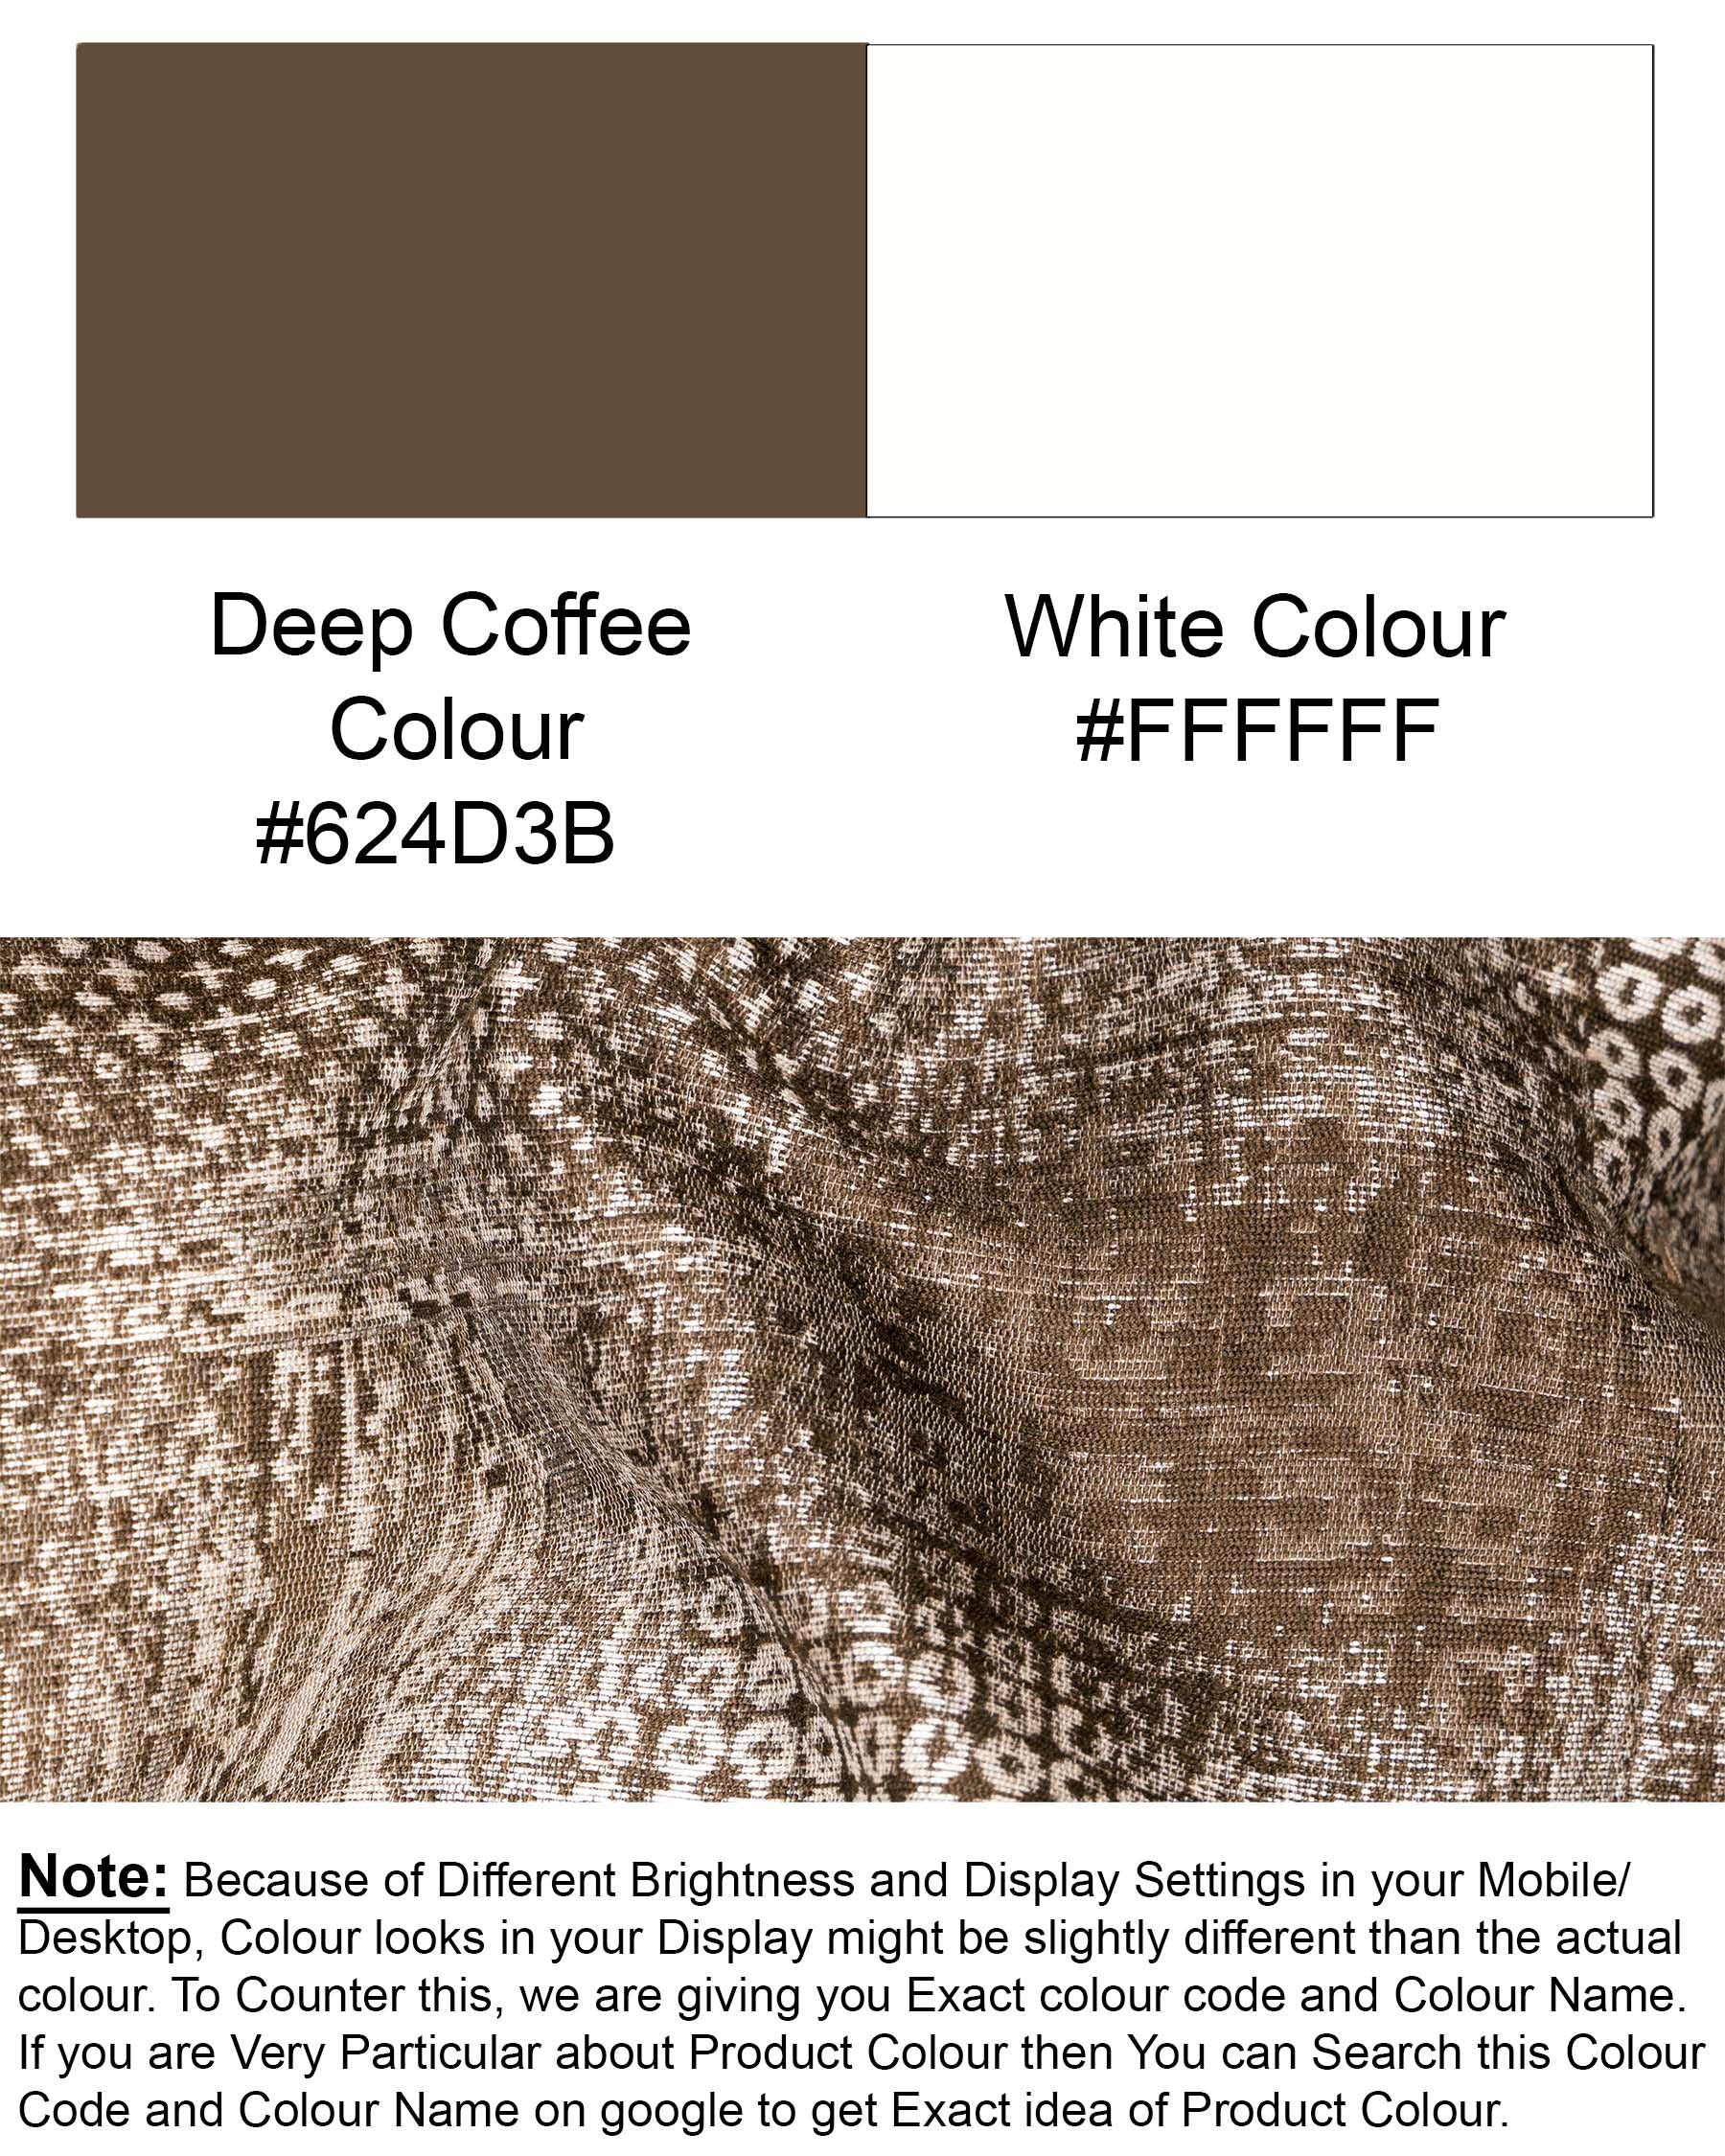 Deep Coffee and Off-White Unique Textured Cross-Buttoned Bandhgala Designer Blazer BL1761-CBG-36,BL1761-CBG-38,BL1761-CBG-40,BL1761-CBG-42,BL1761-CBG-44,BL1761-CBG-46,BL1761-CBG-48,BL1761-CBG-50,BL1761-CBG-52,BL1761-CBG-54,BL1761-CBG-56,BL1761-CBG-58,BL1761-CBG-60